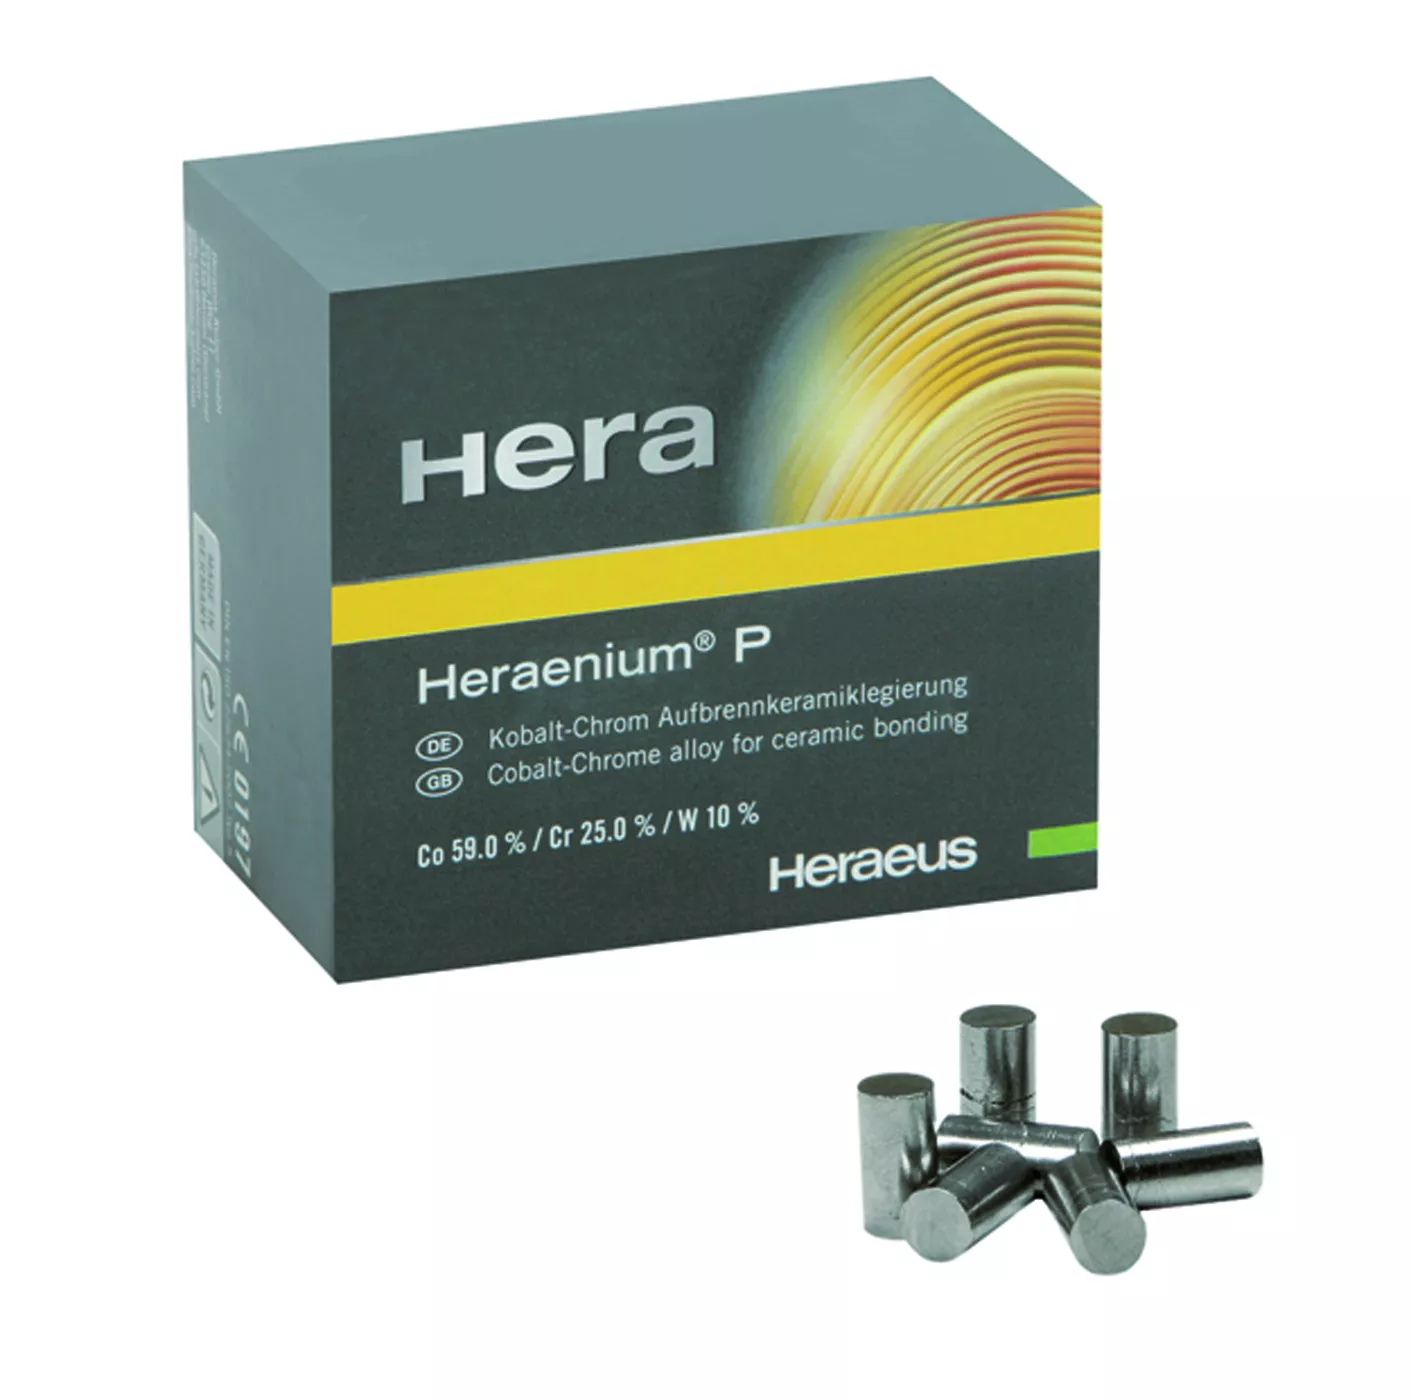 Heraenium P, (1000г)  дентальный сплав для керамики (Co, Cr, Mo, Mn, Si, W )